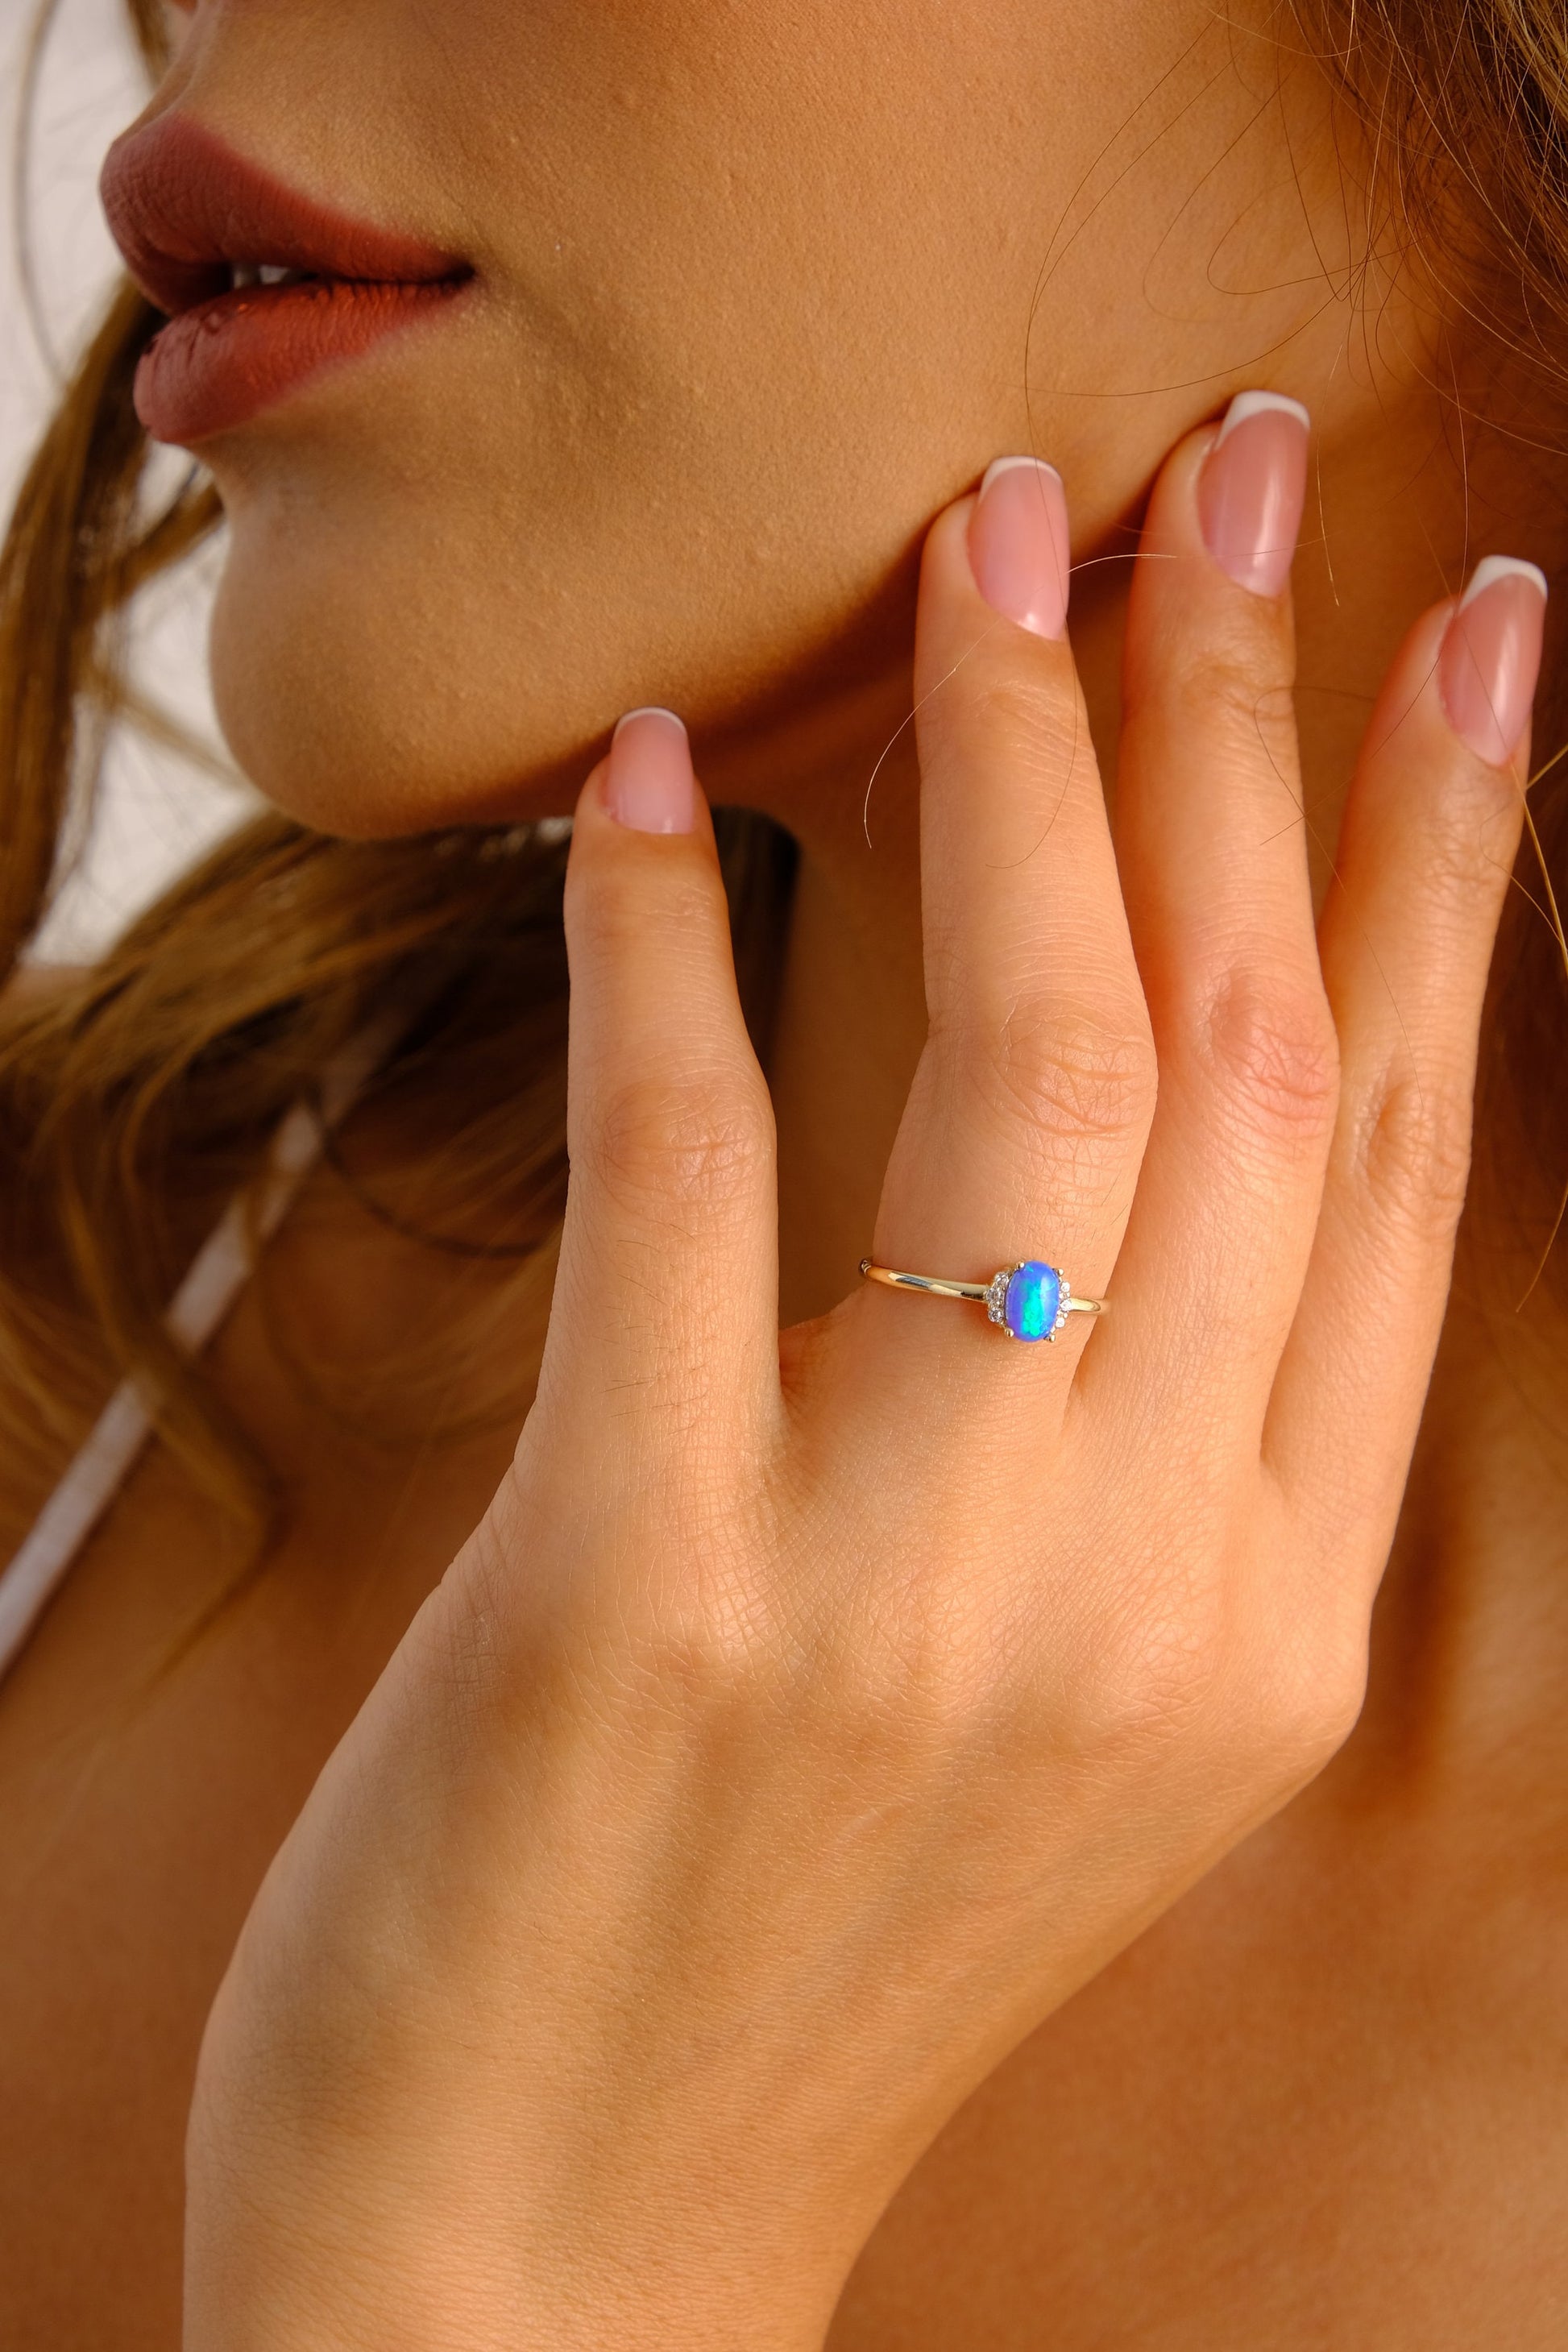 14K Gold Opal Ring, Blue Opal Ring, CZ Diamond Stacking Opal Ring, Dainty Gold Ring, Opal Jewelry, Wedding Engagement Gift